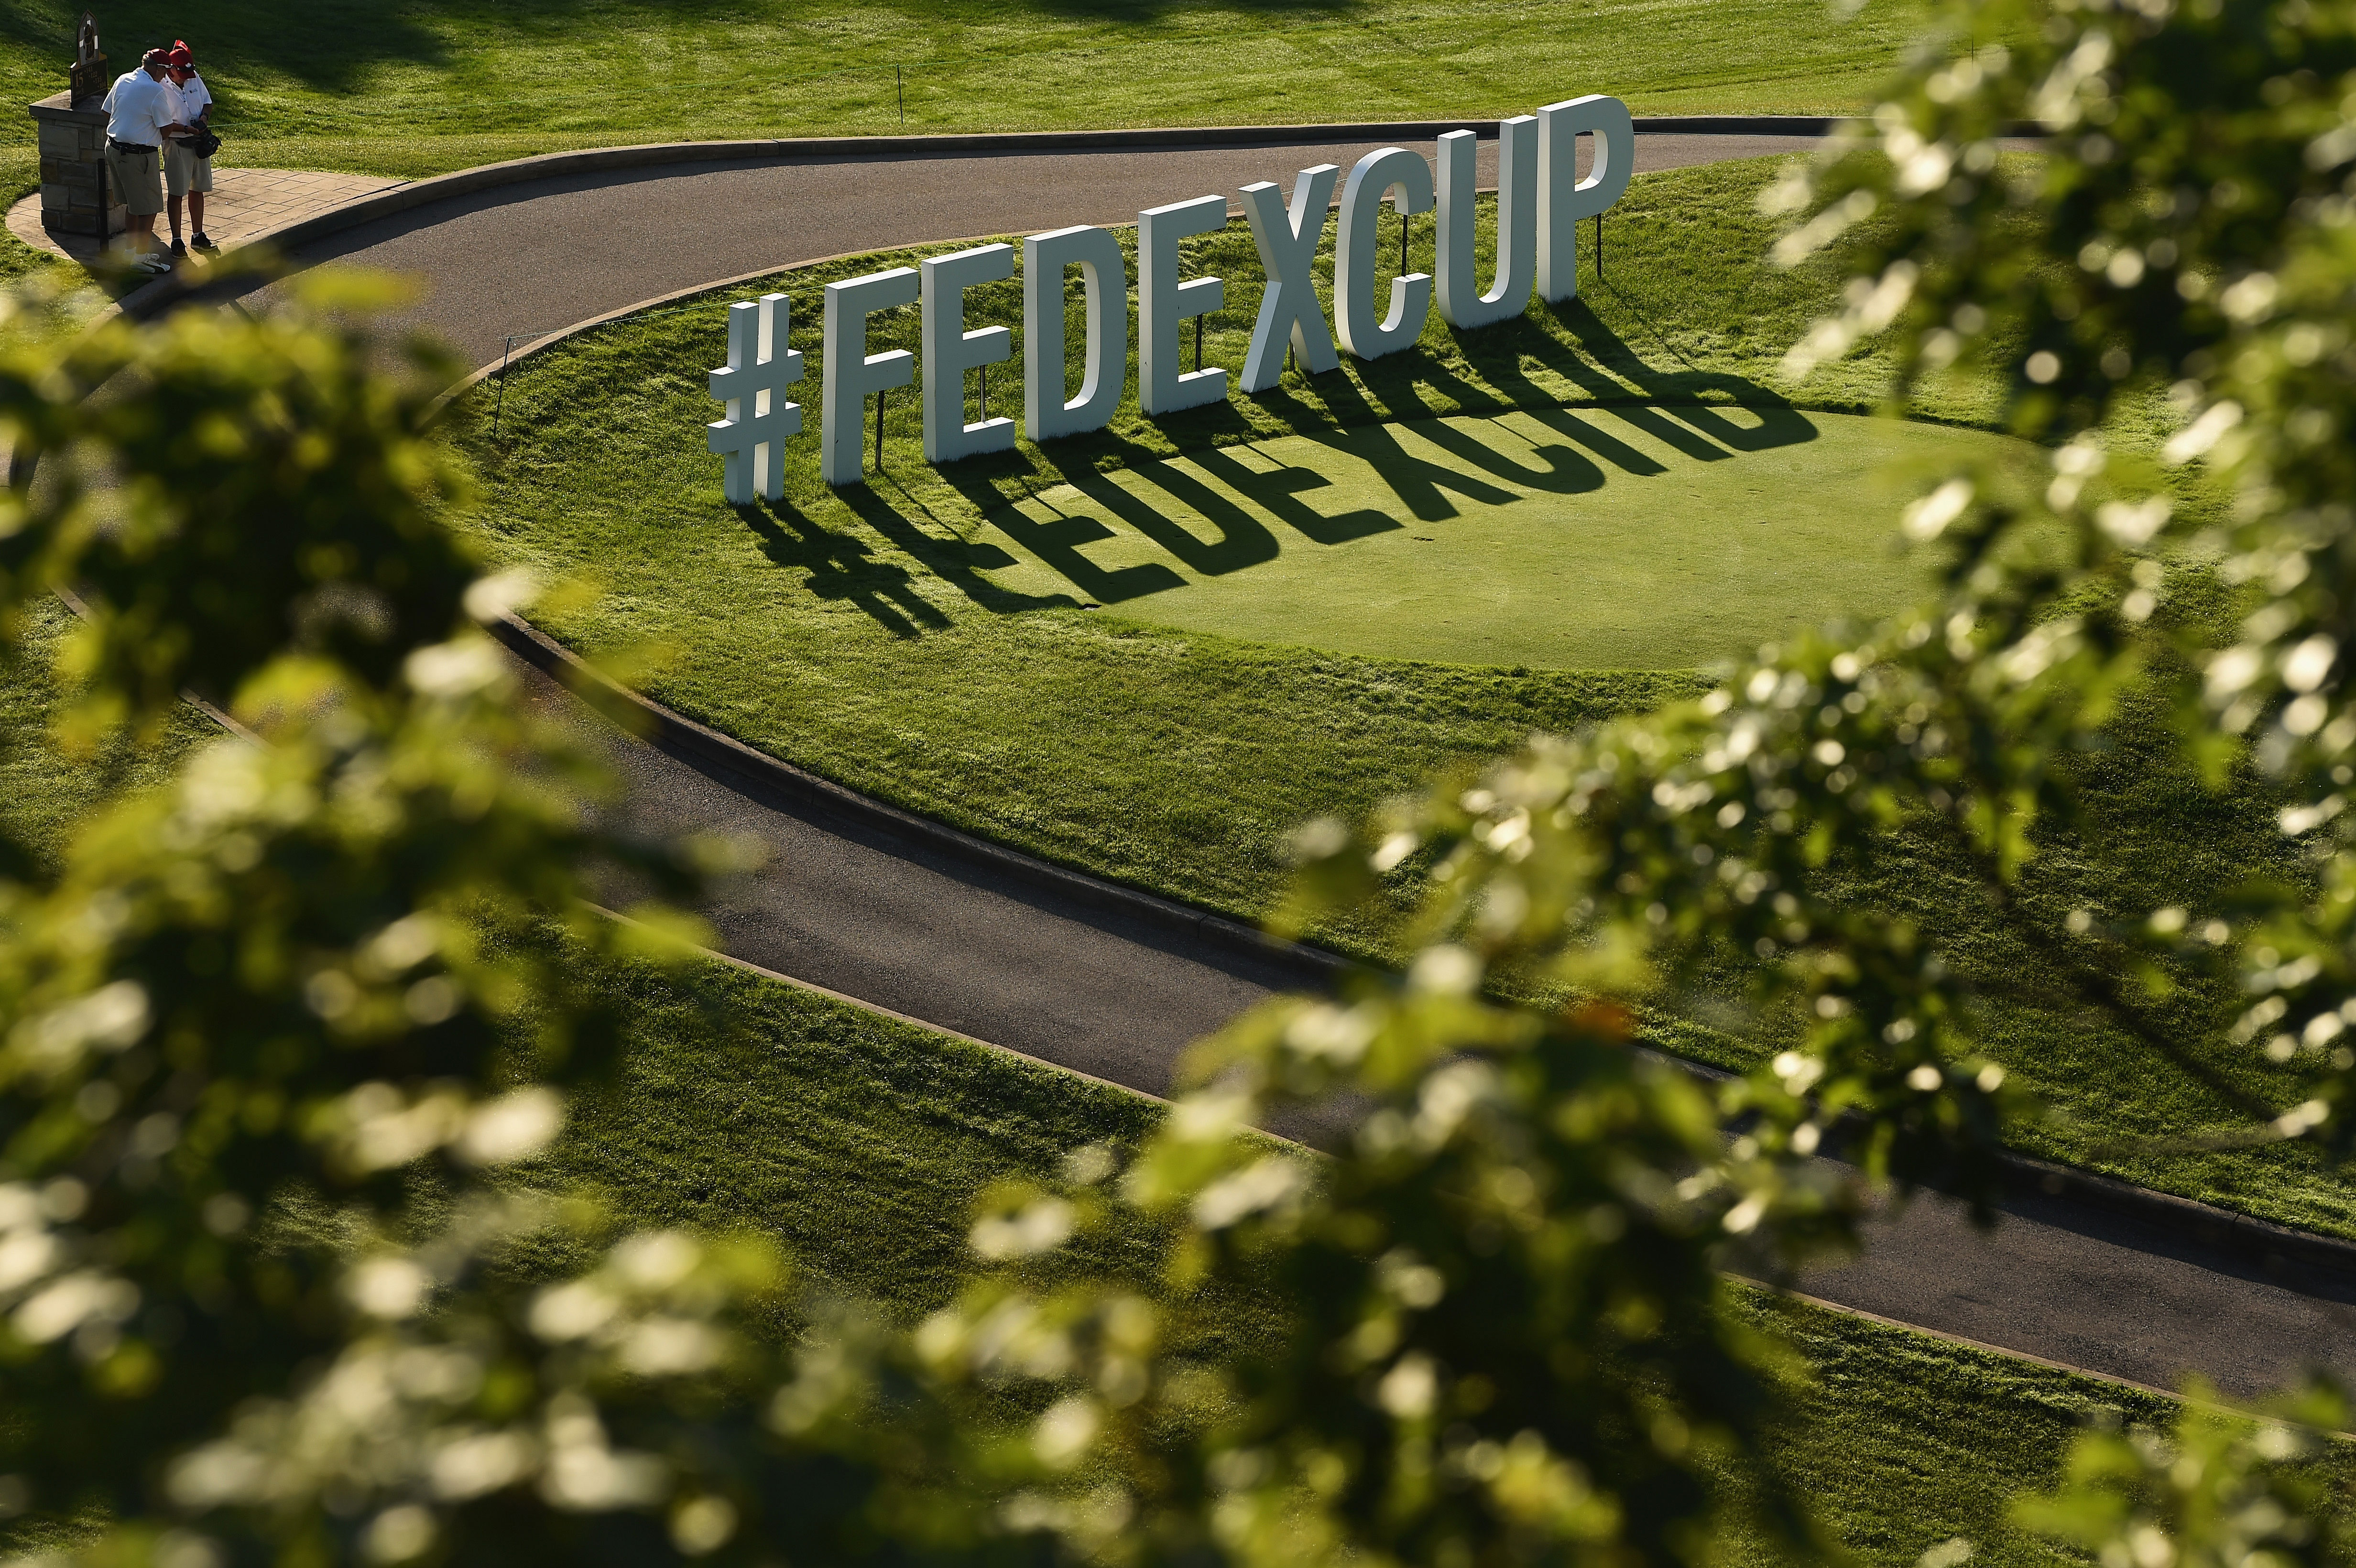 fedex cup online